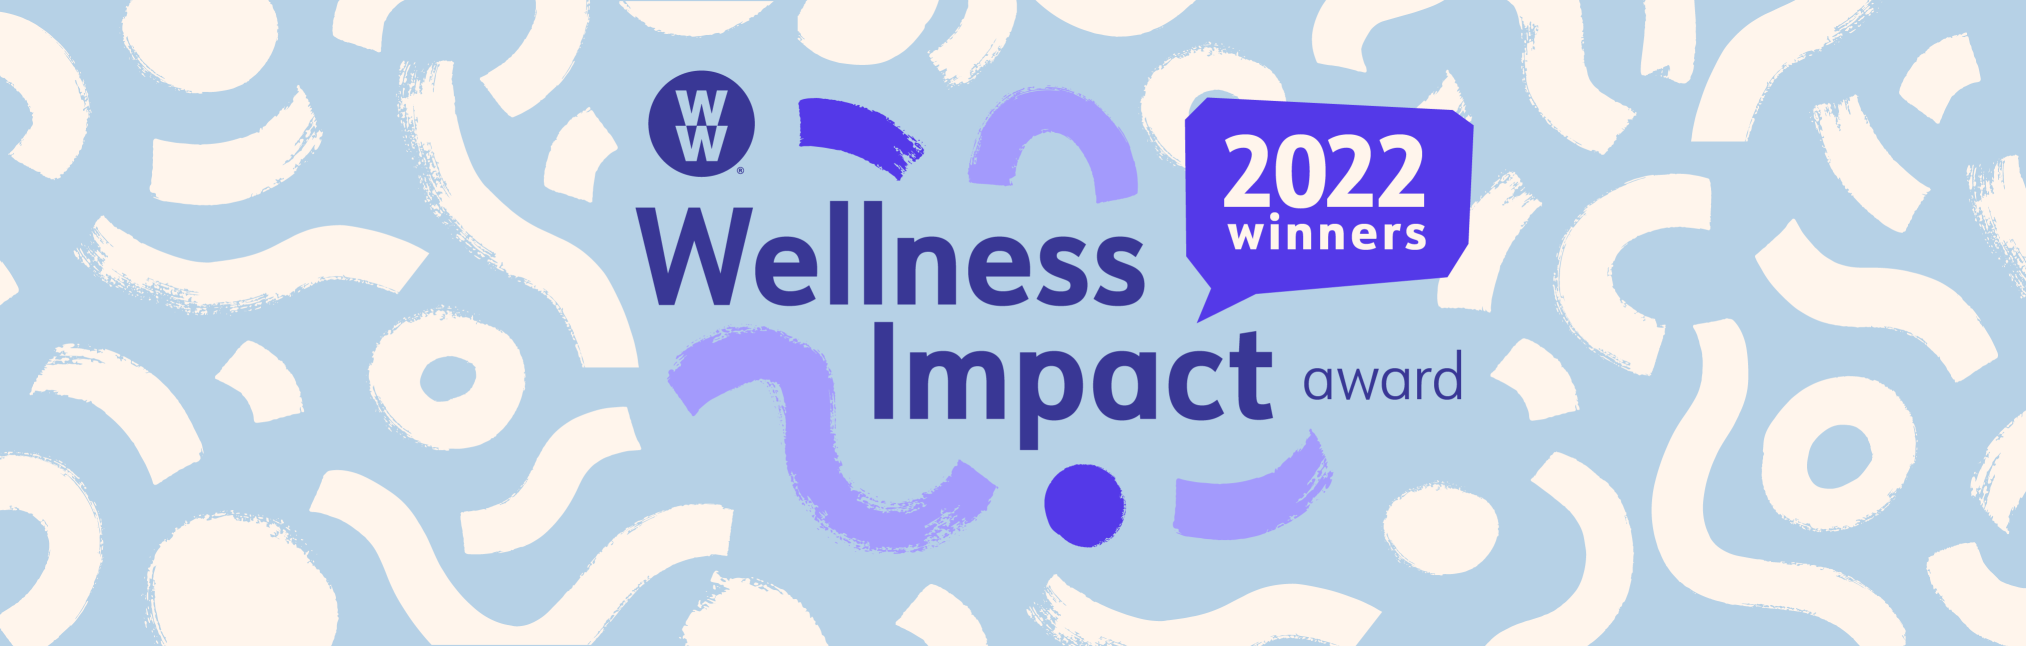 Weight Watchers Wellness Impact Award 2022 Winners